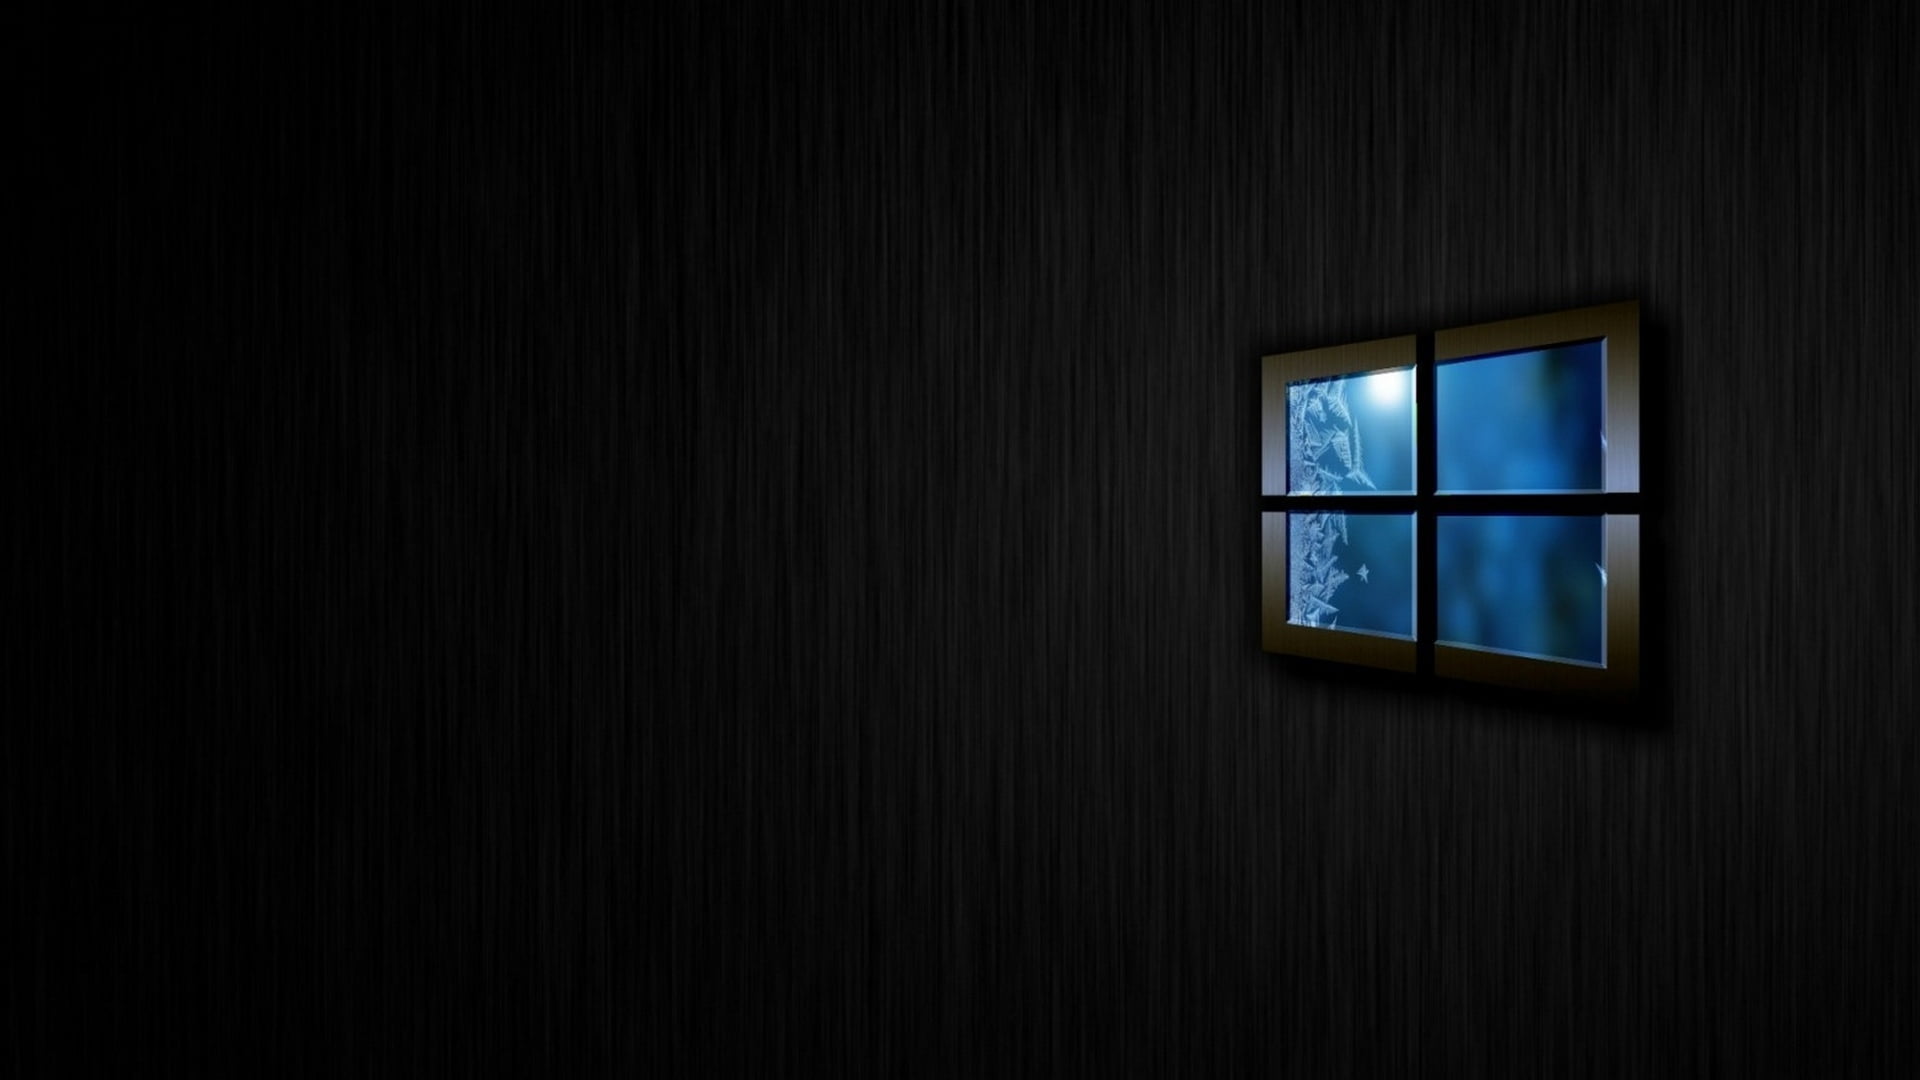 brown wooden window, Microsoft Windows, Windows 10, wall - building feature